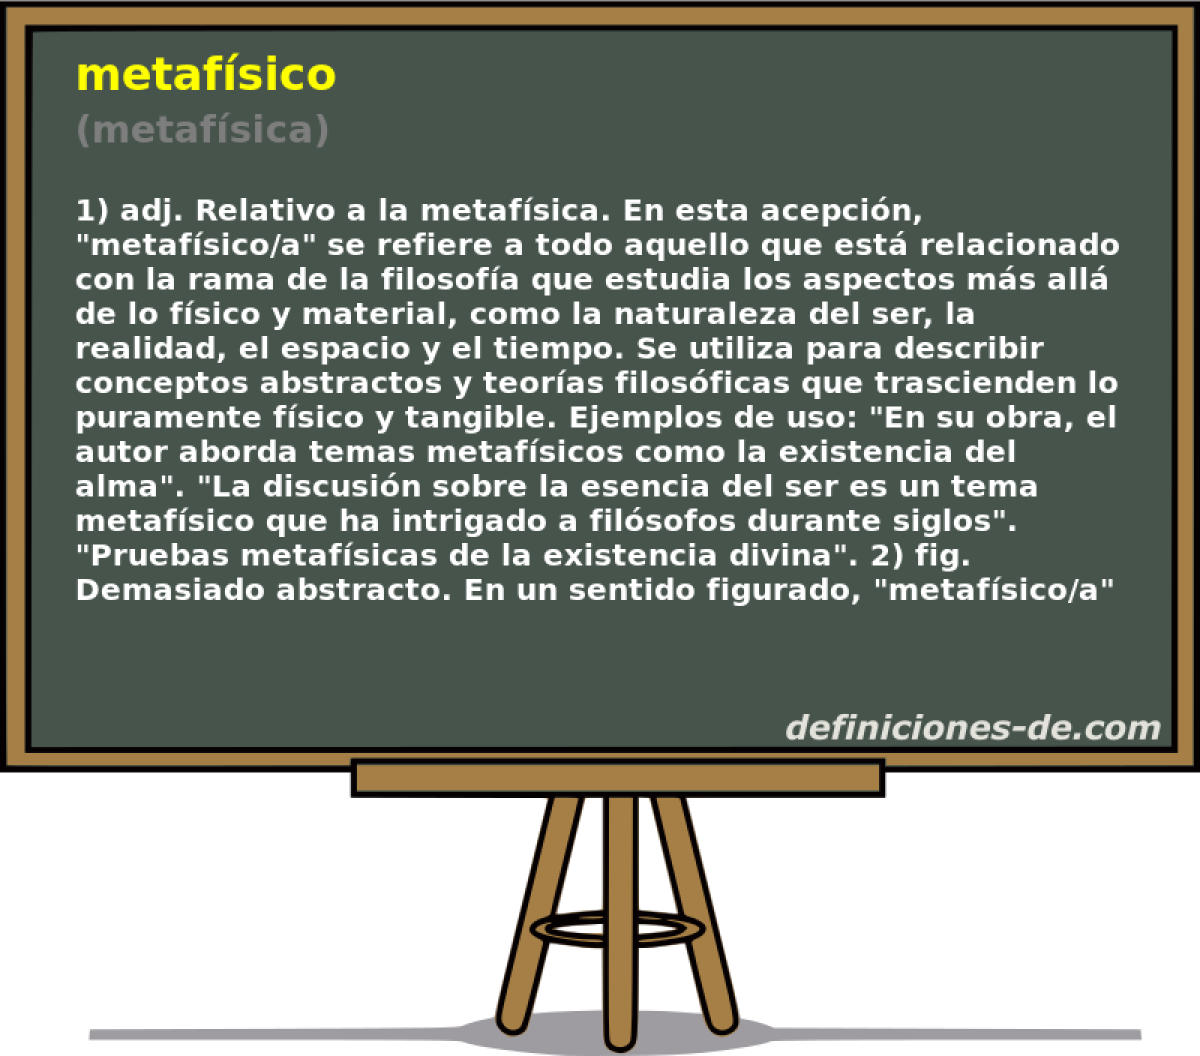 metafsico (metafsica)